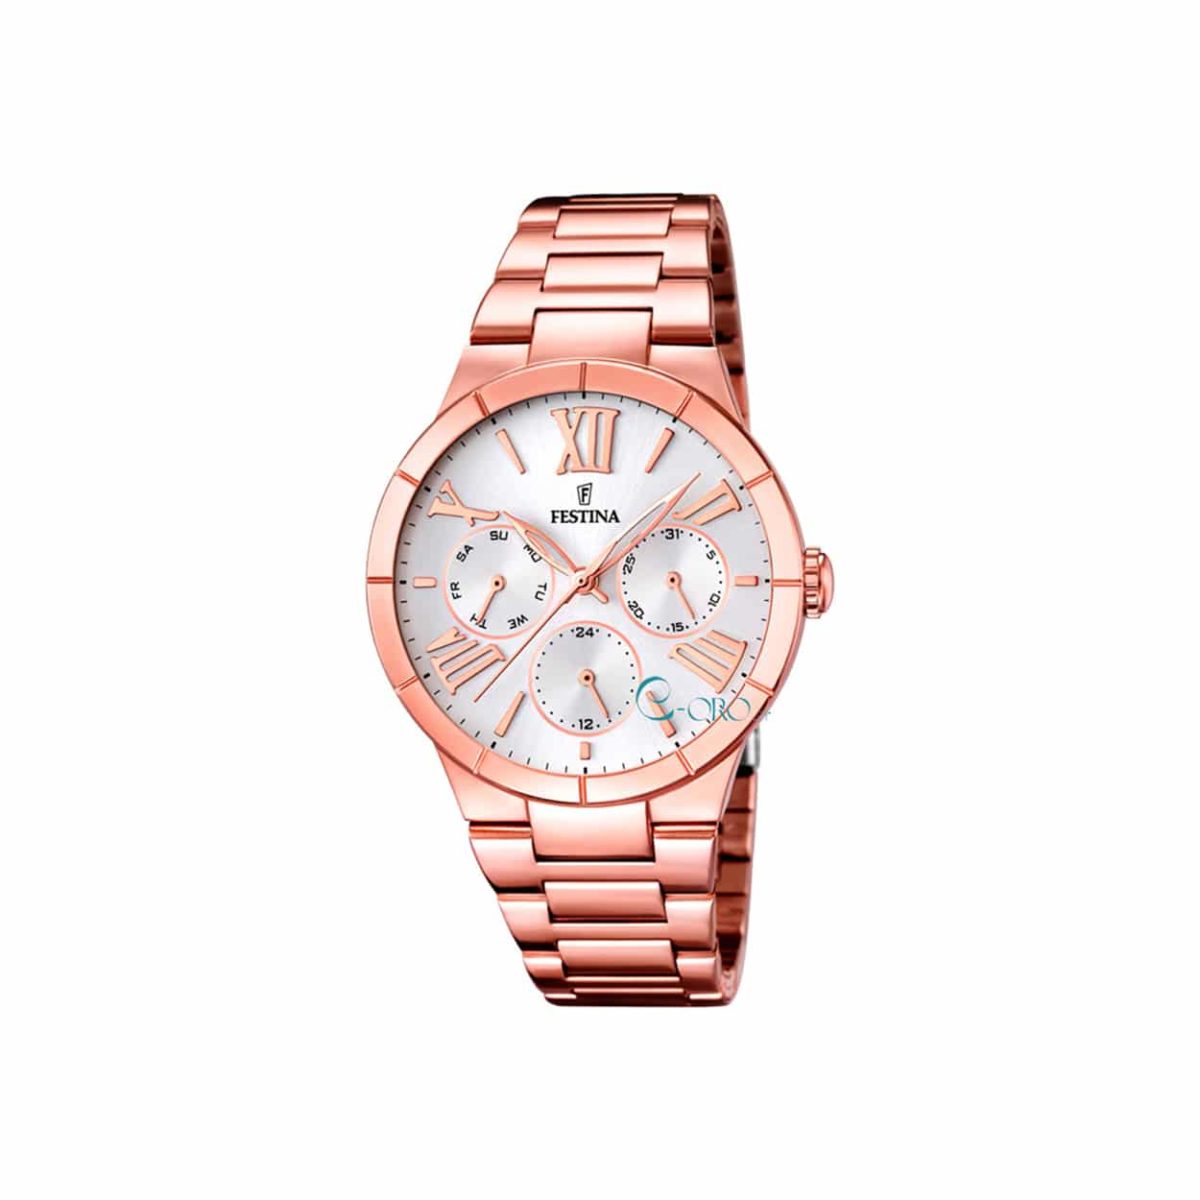 Festina Multifunction Rose Gold Women's Watch - F16718/9